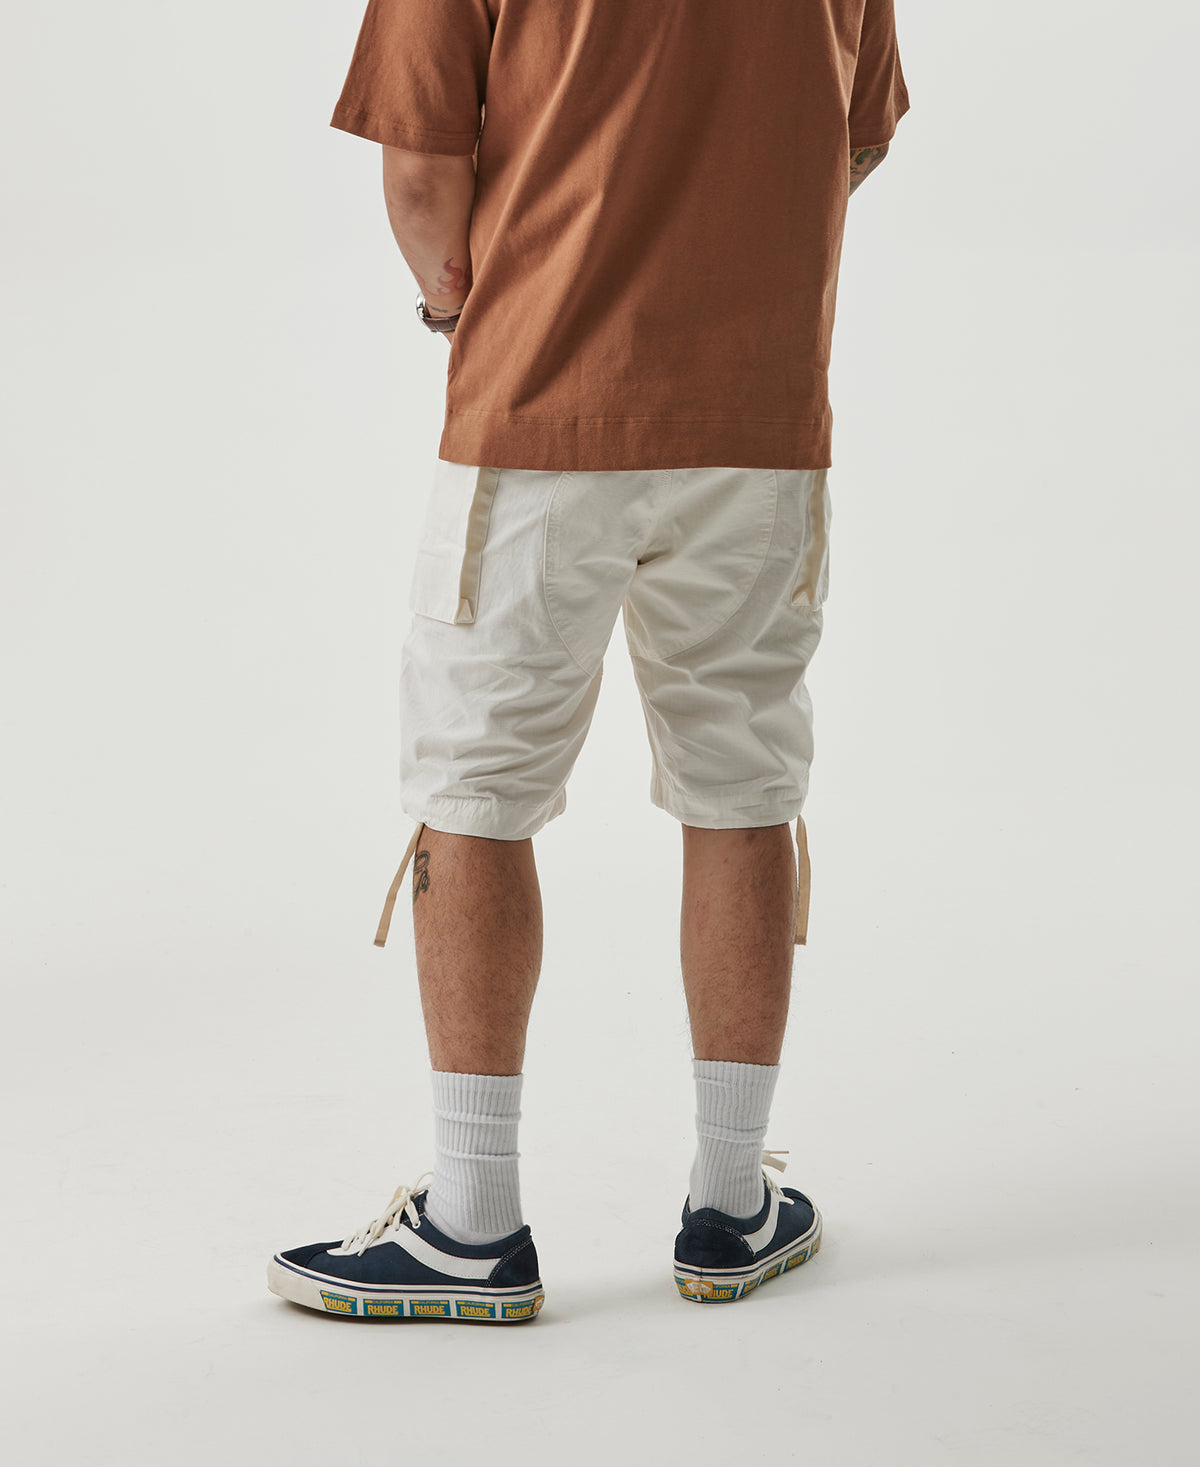 8.5 oz Cotton Ripstop Cargo Shorts - White